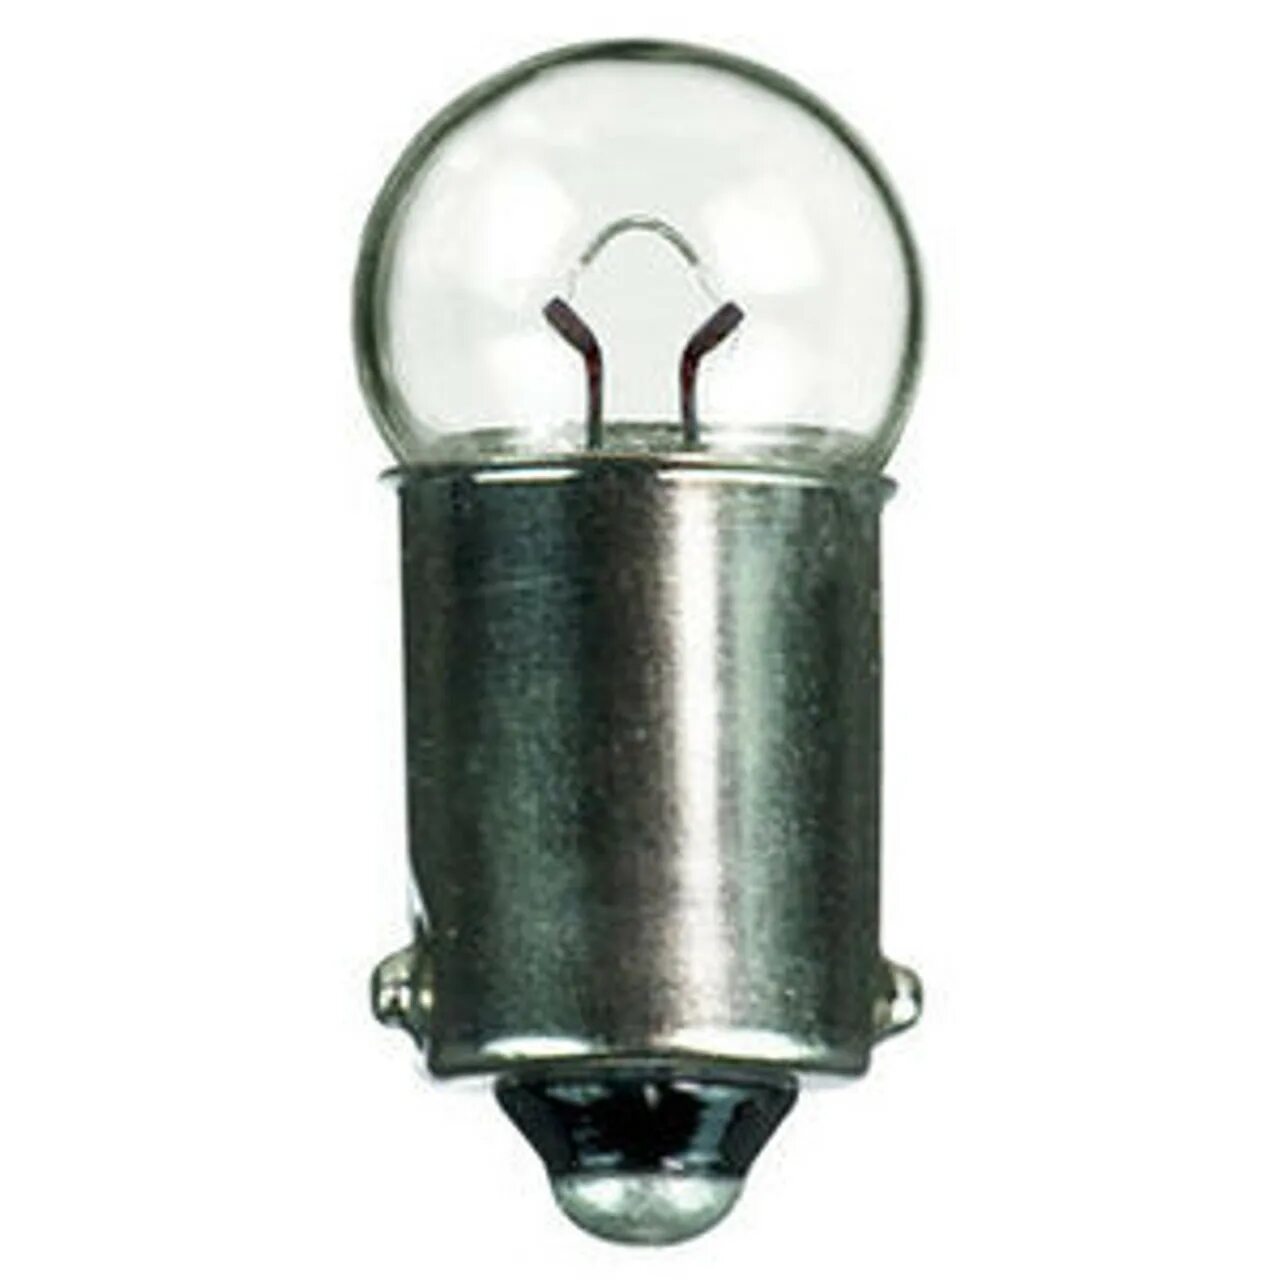 Лампочка байонетная ba9s 30bdc. Лампа миниатюрная штифтовой цоколь байонет. Лампа накаливания с байонетным цоколем ba20d 130 вольт. Лампа миниатюрная 28 вольт цоколь=MG5.7S/9. 12v 6w